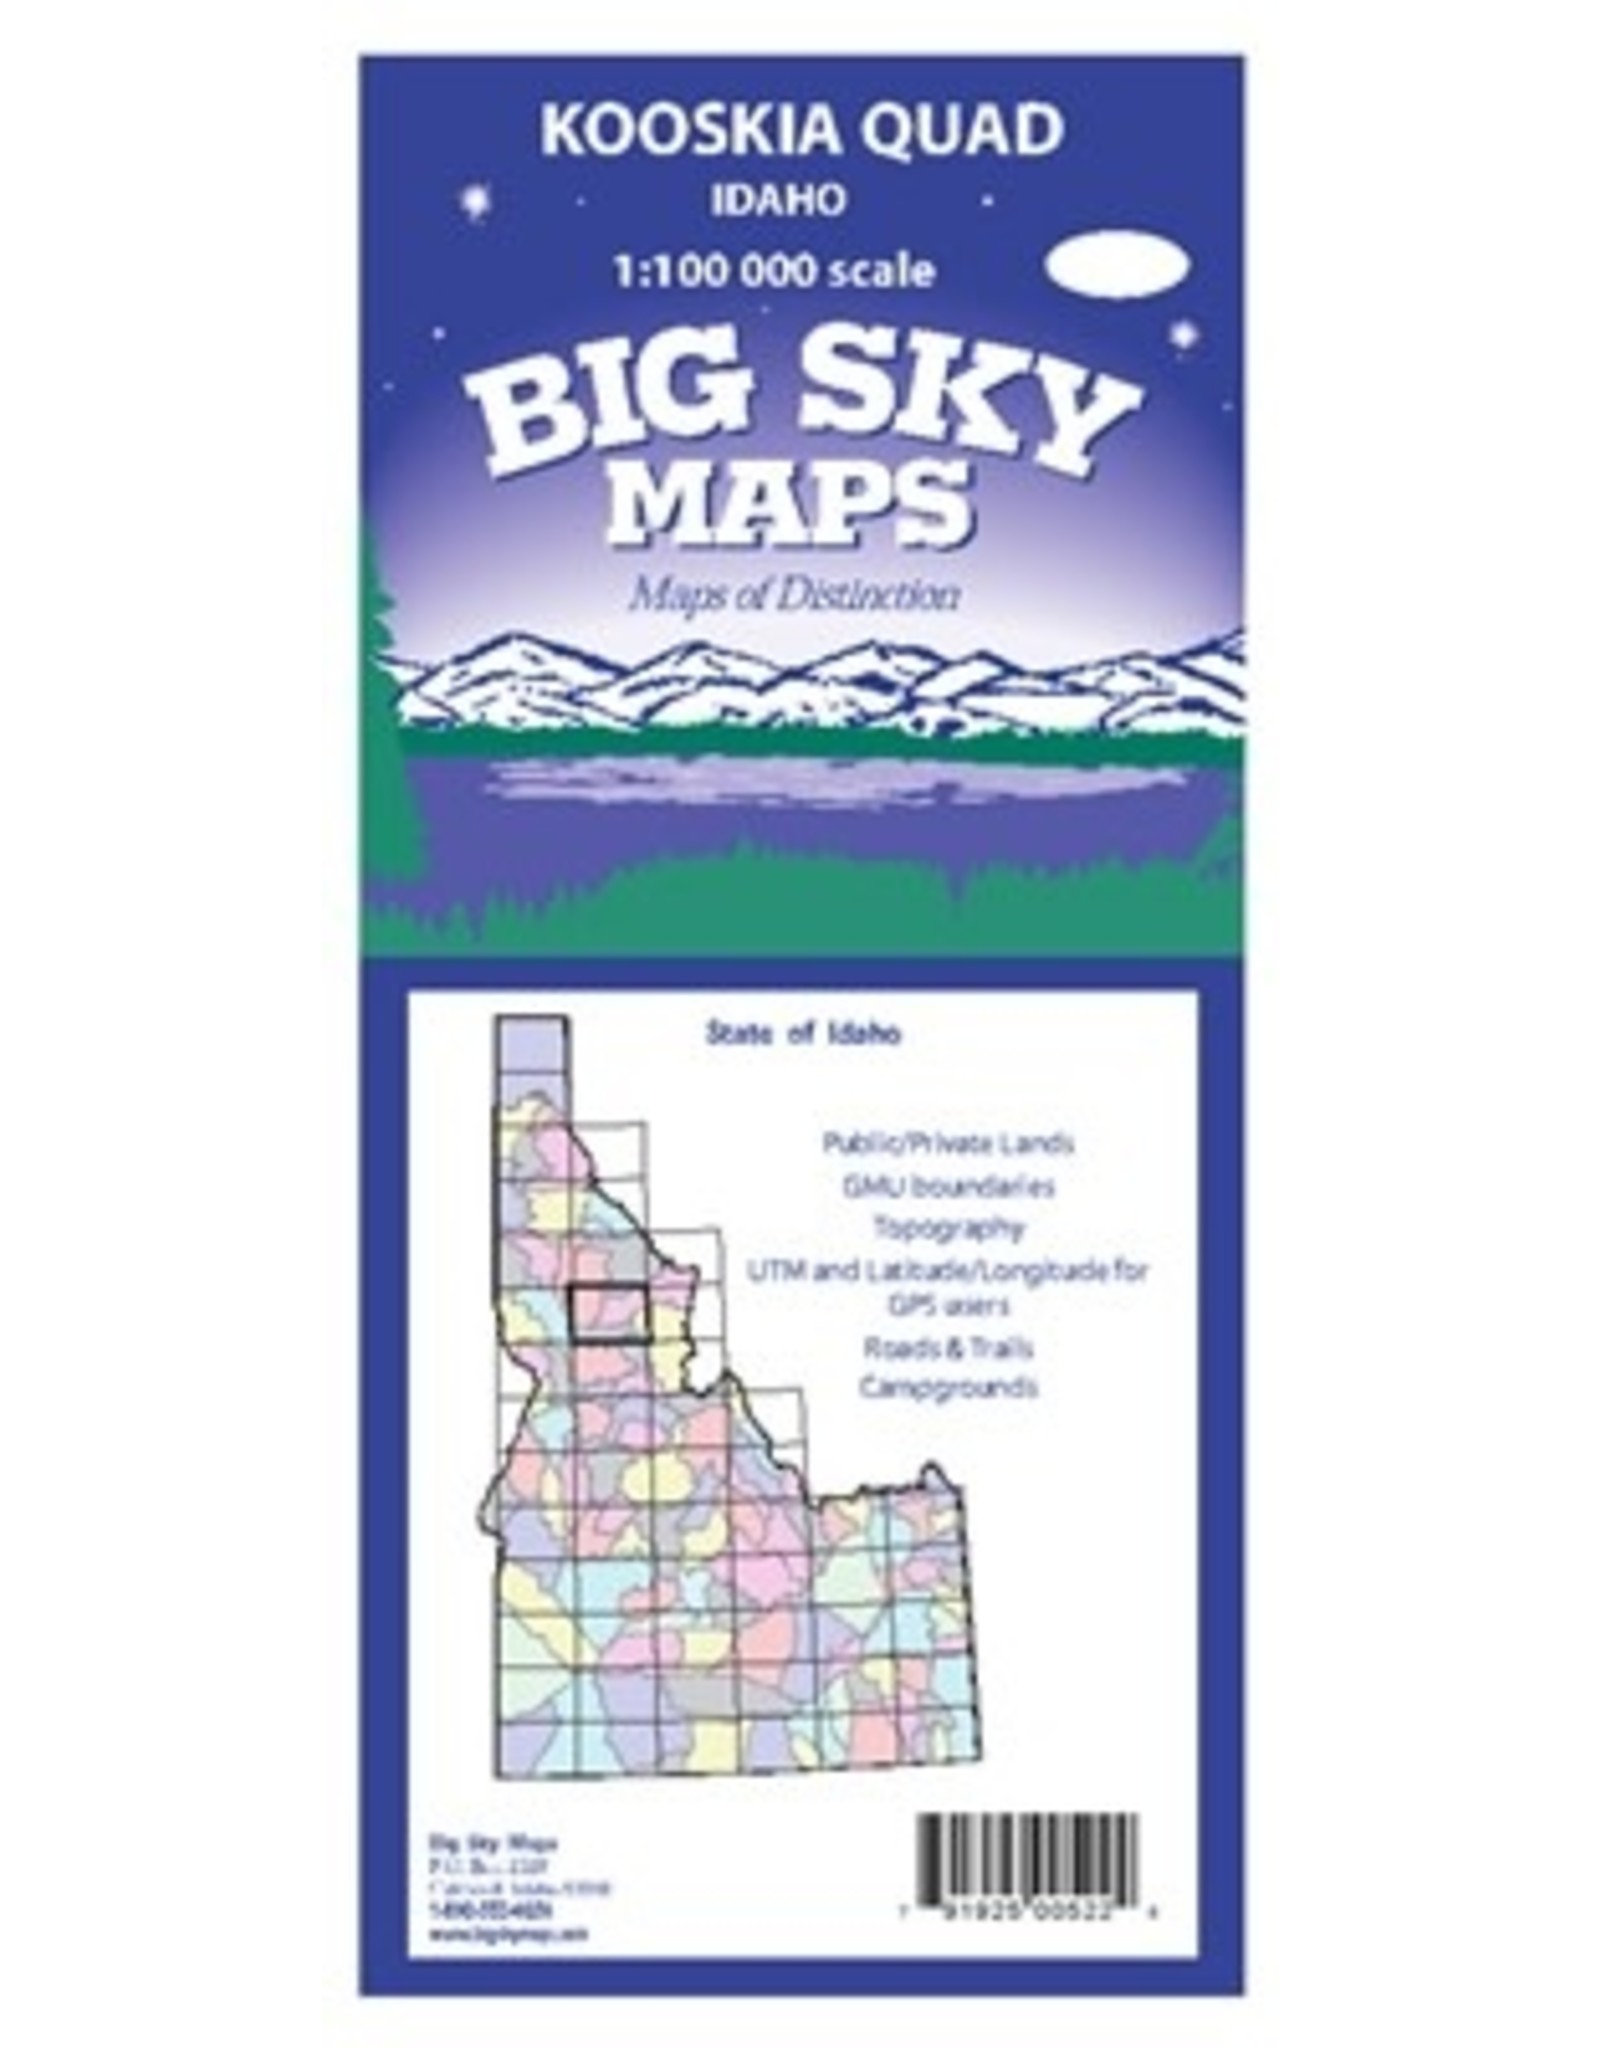 Big Sky Maps - Kooskia Quad